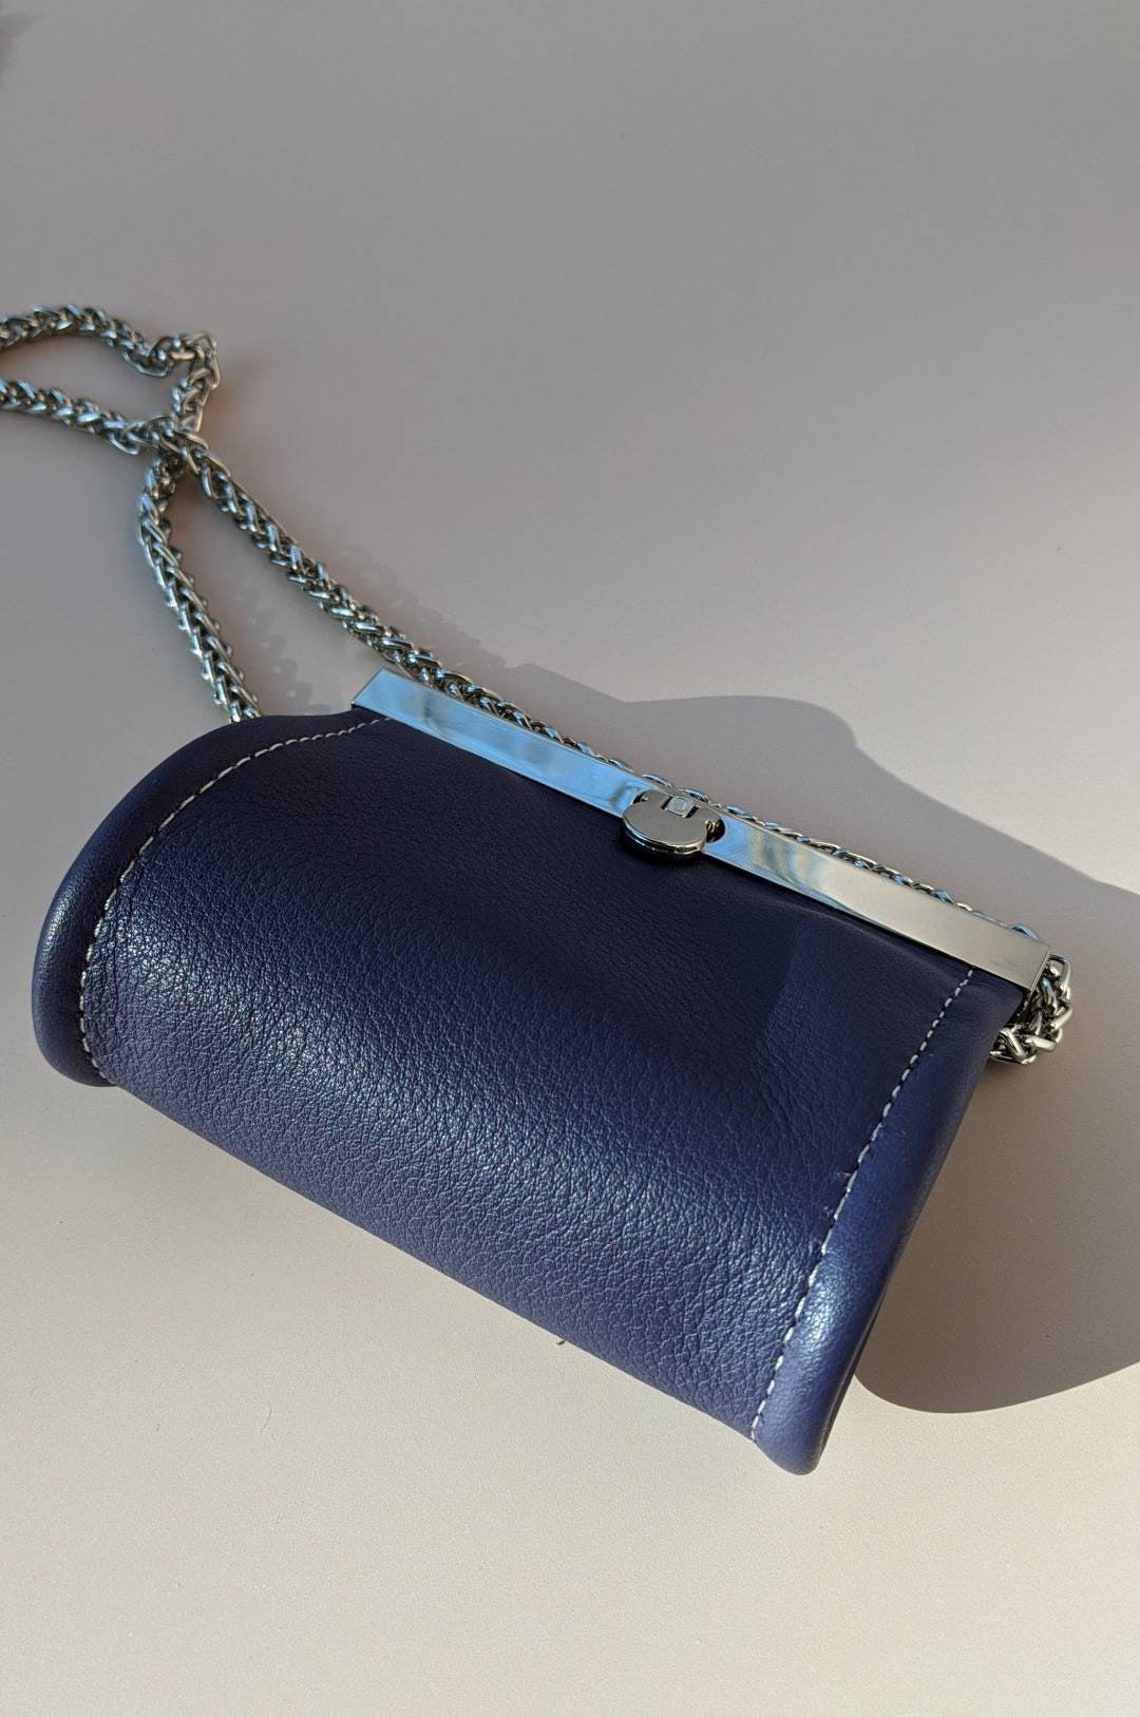 Micro purse leather leather handbag micro bag leather | Etsy